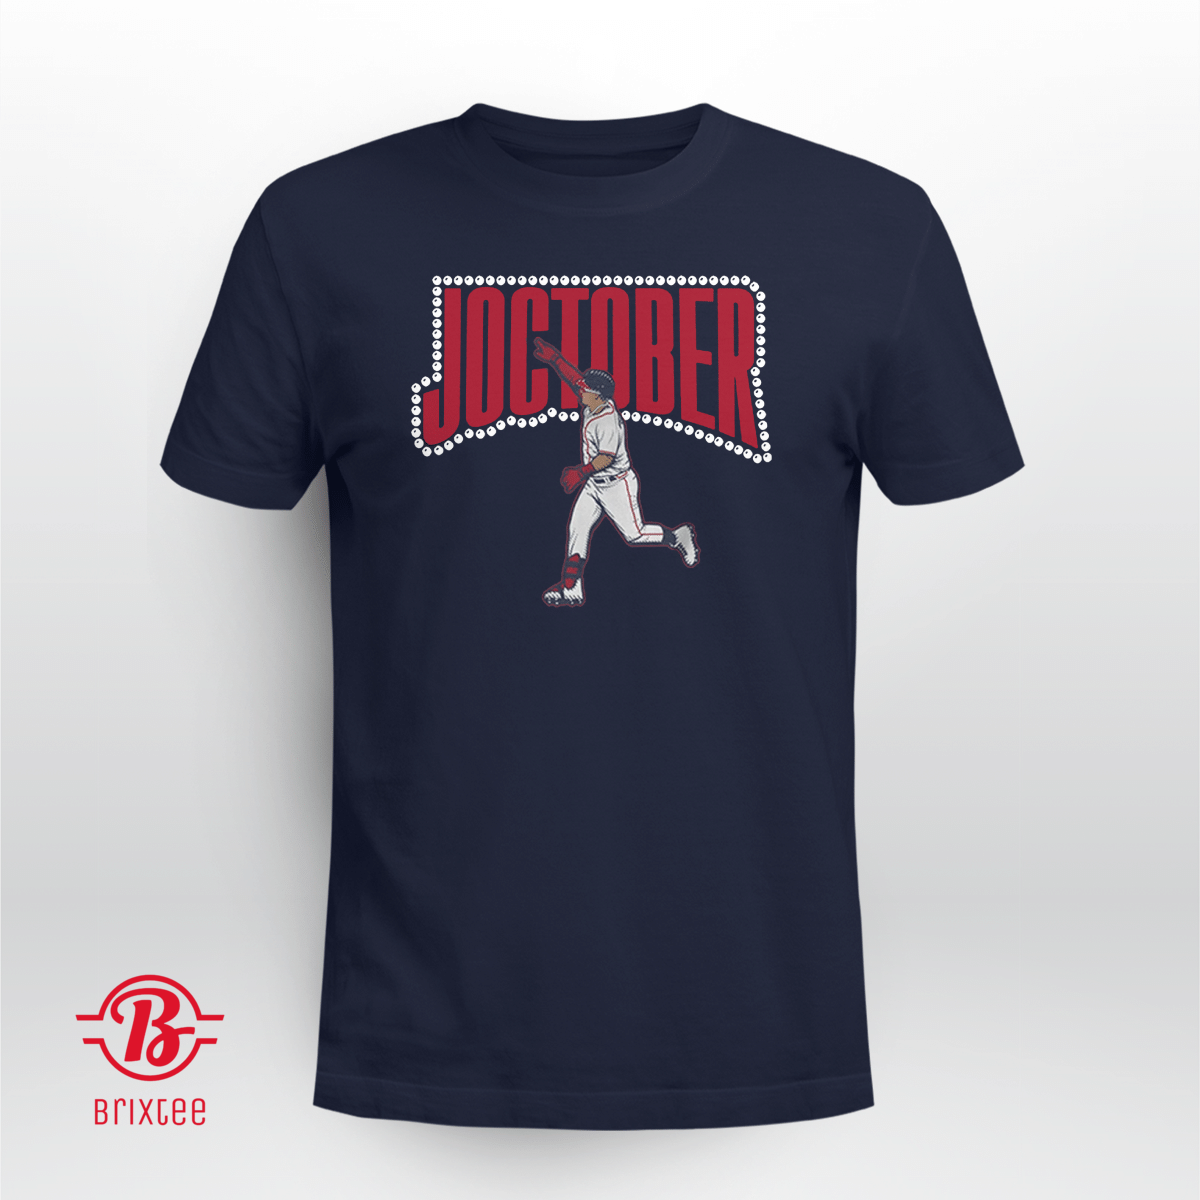 Joc Pederson Joctober | Atlanta Braves